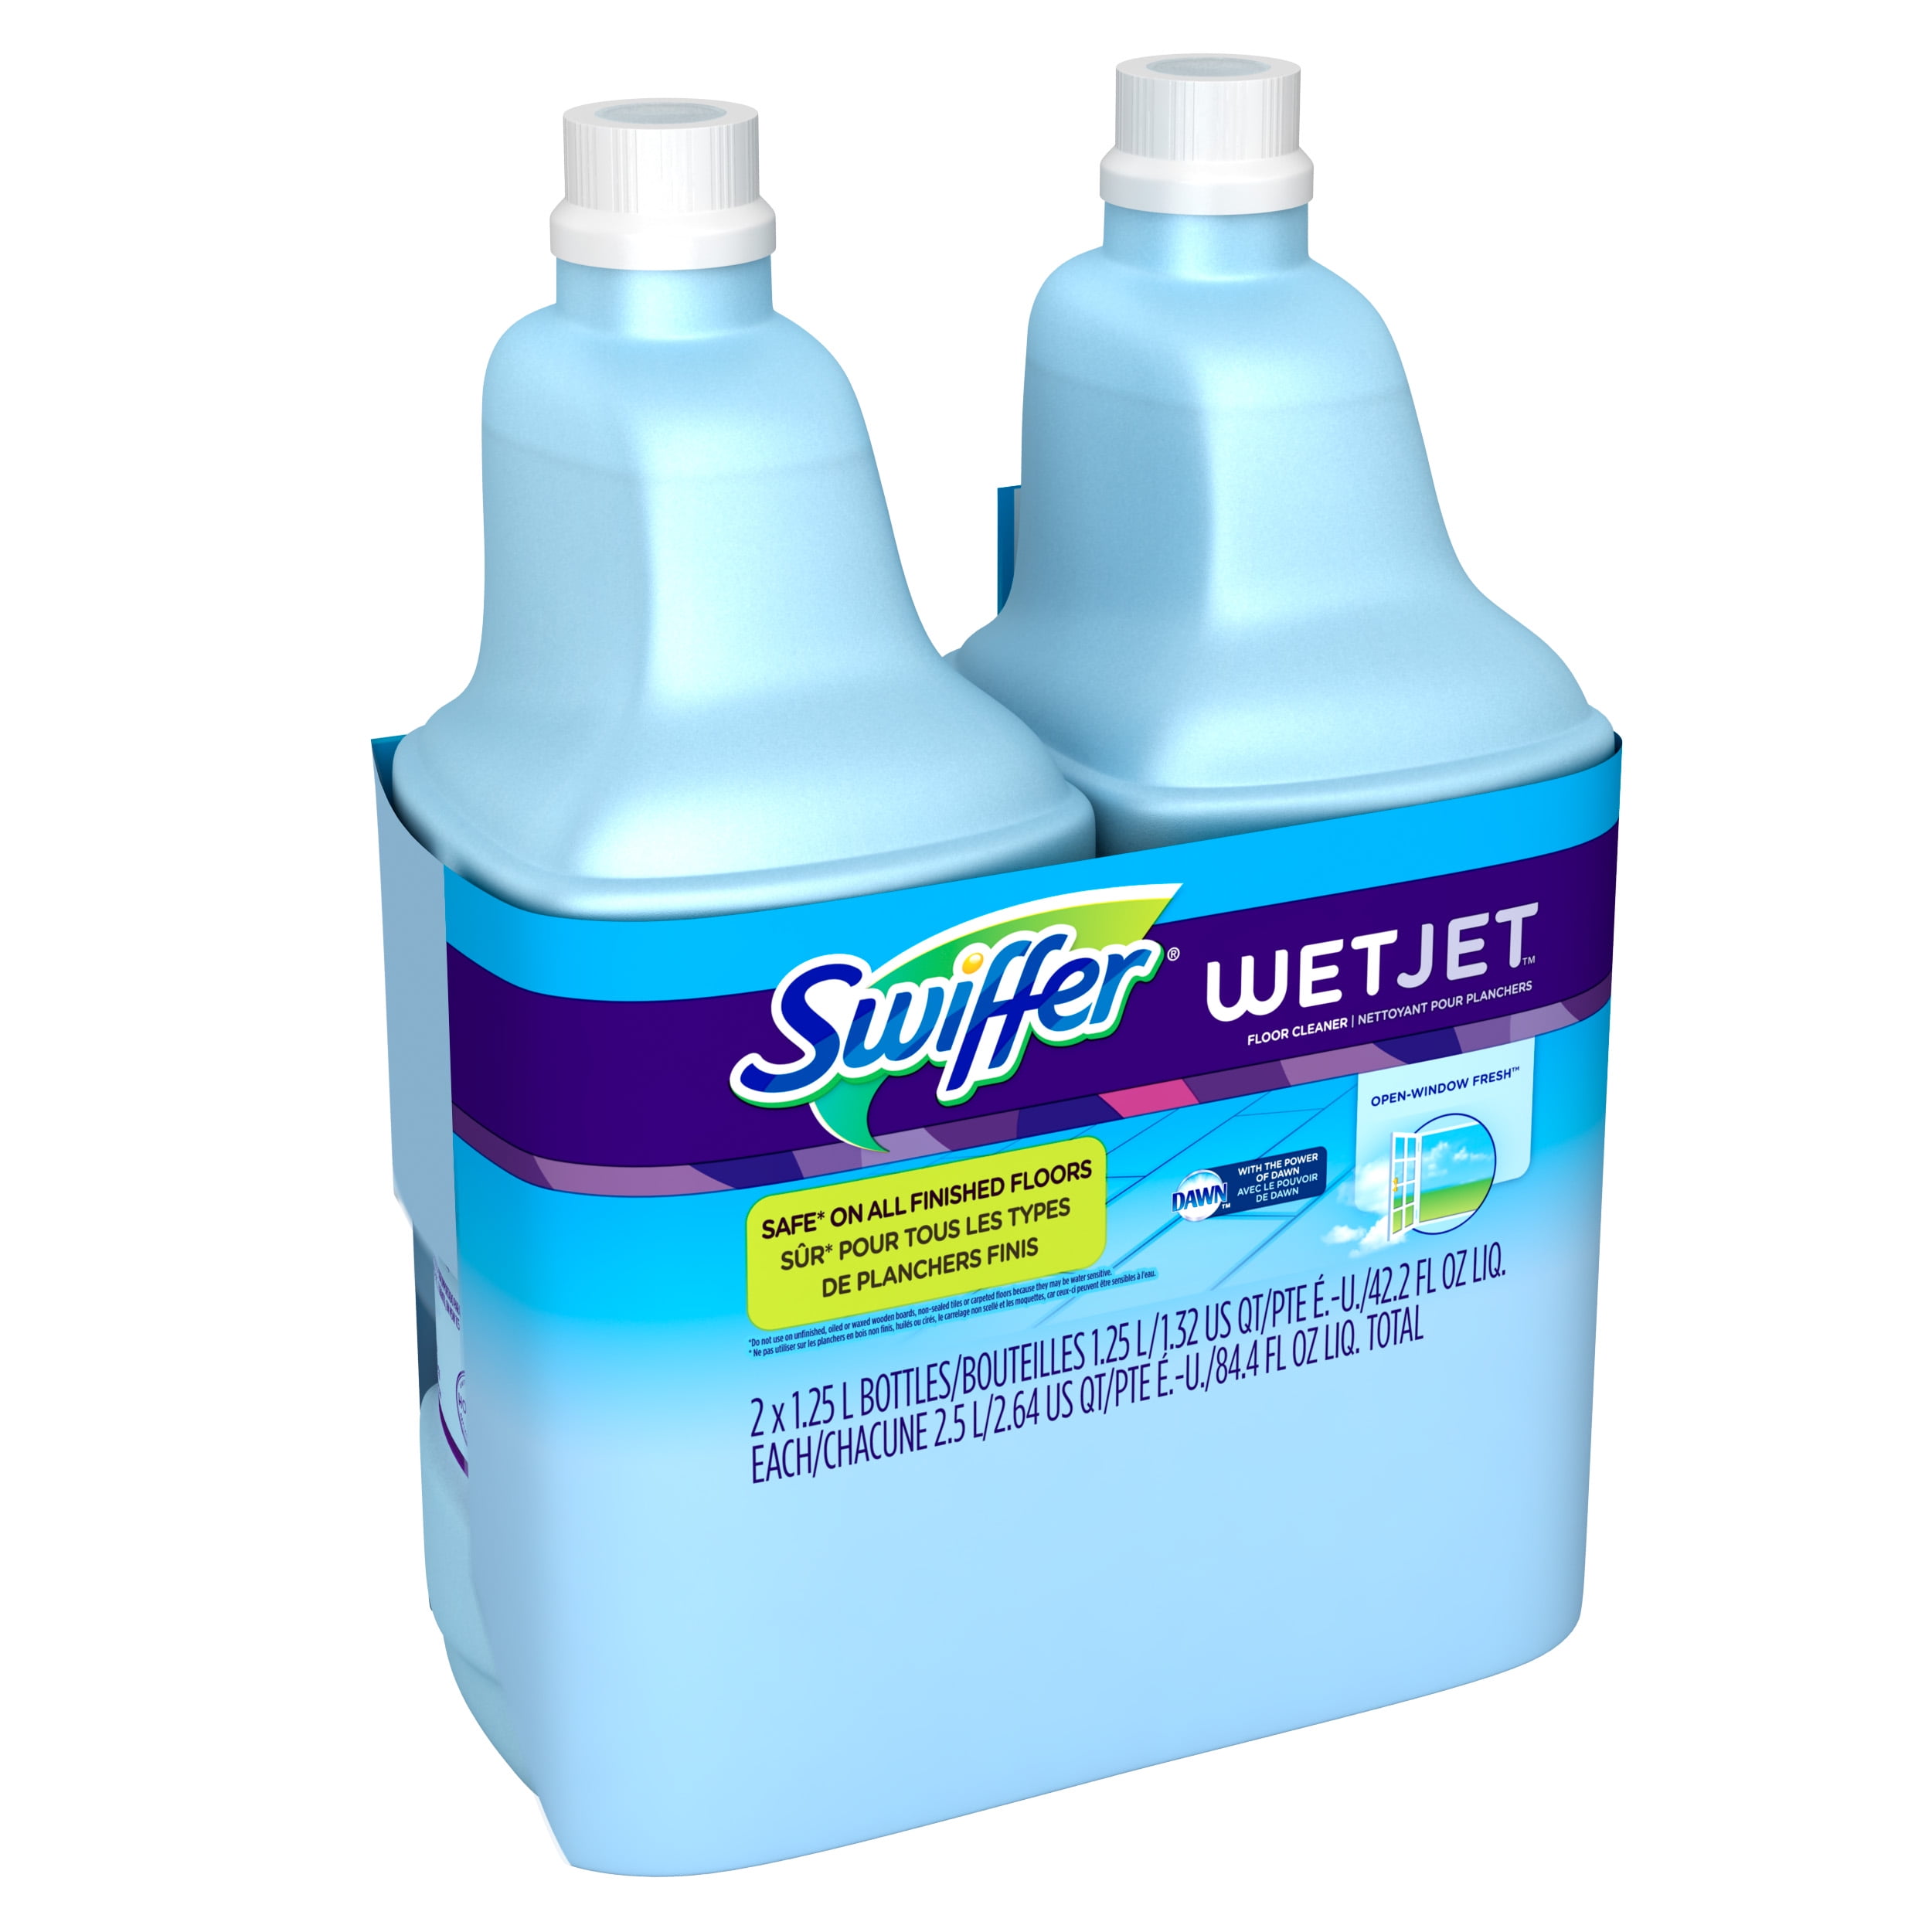 Swiffer WetJet 42 oz. Wood Floor Cleaner Refill 003700023682 - The